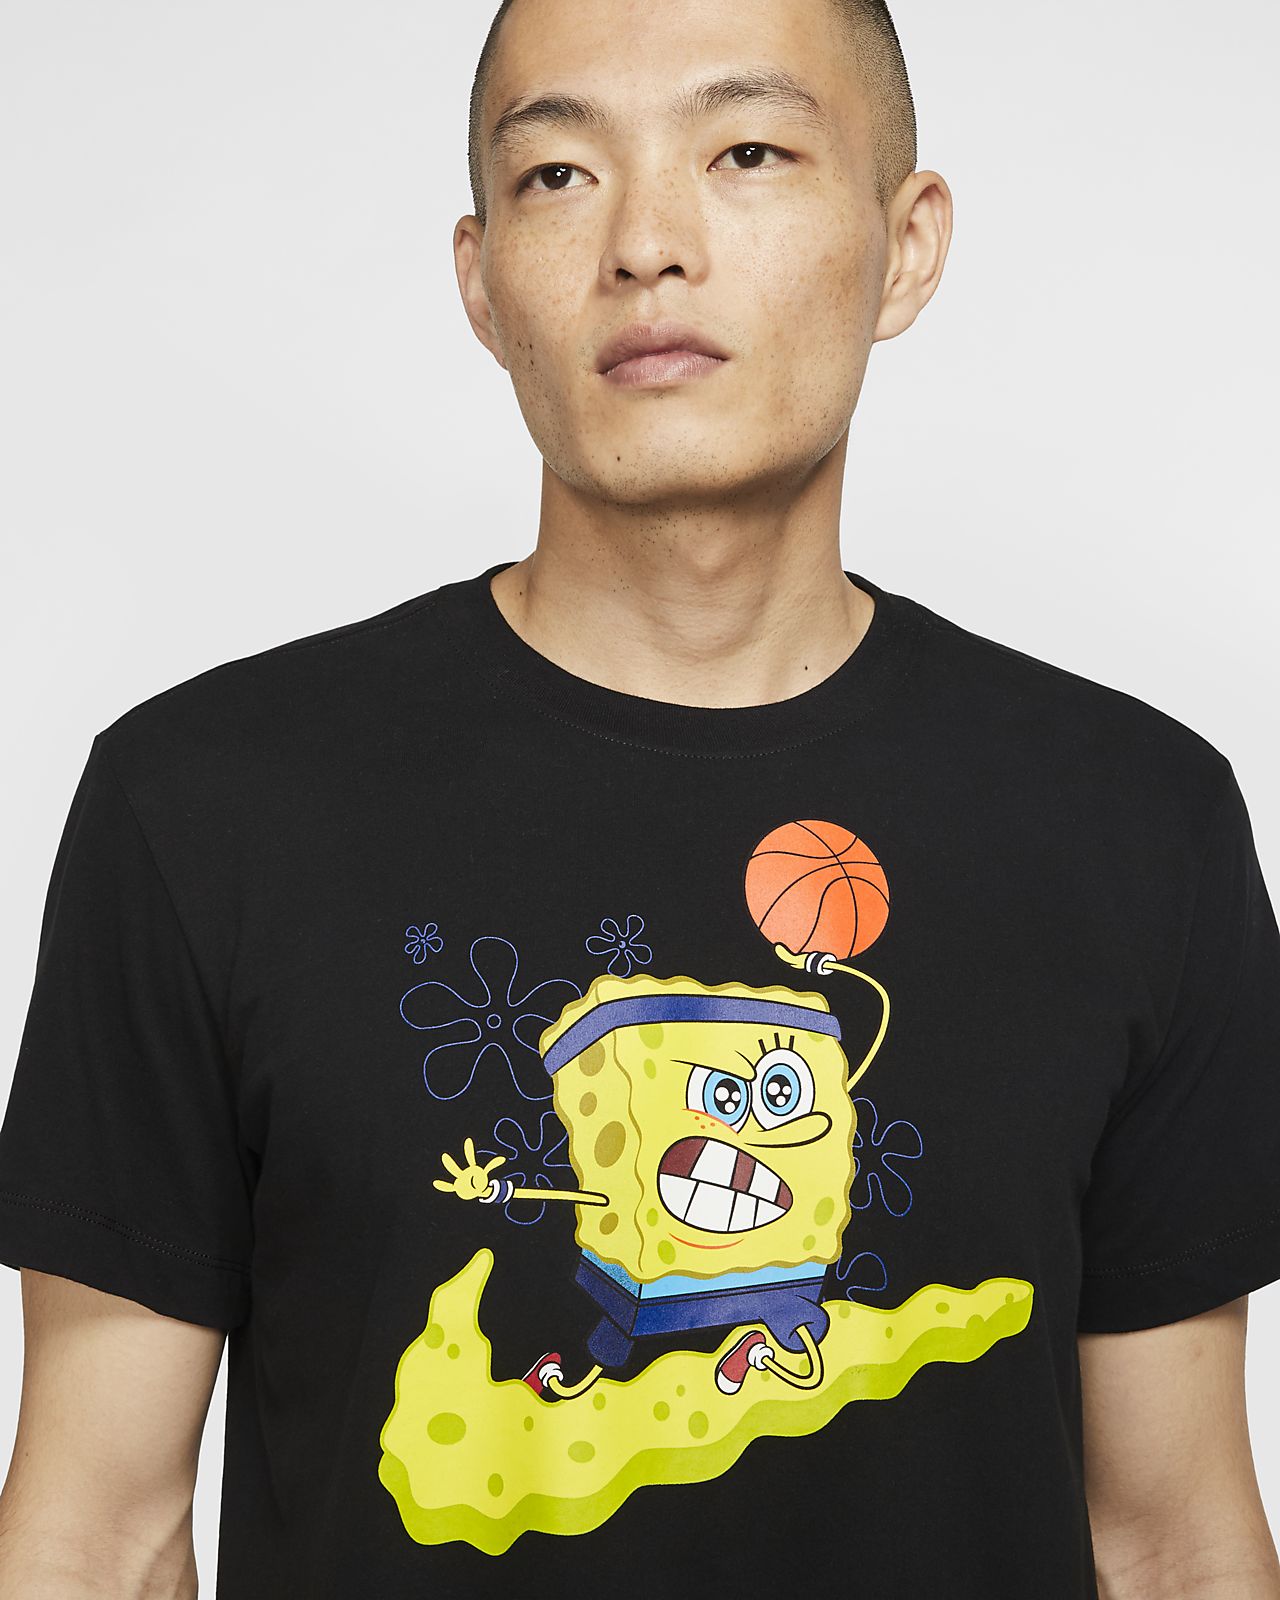 kyrie spongebob shirt youth